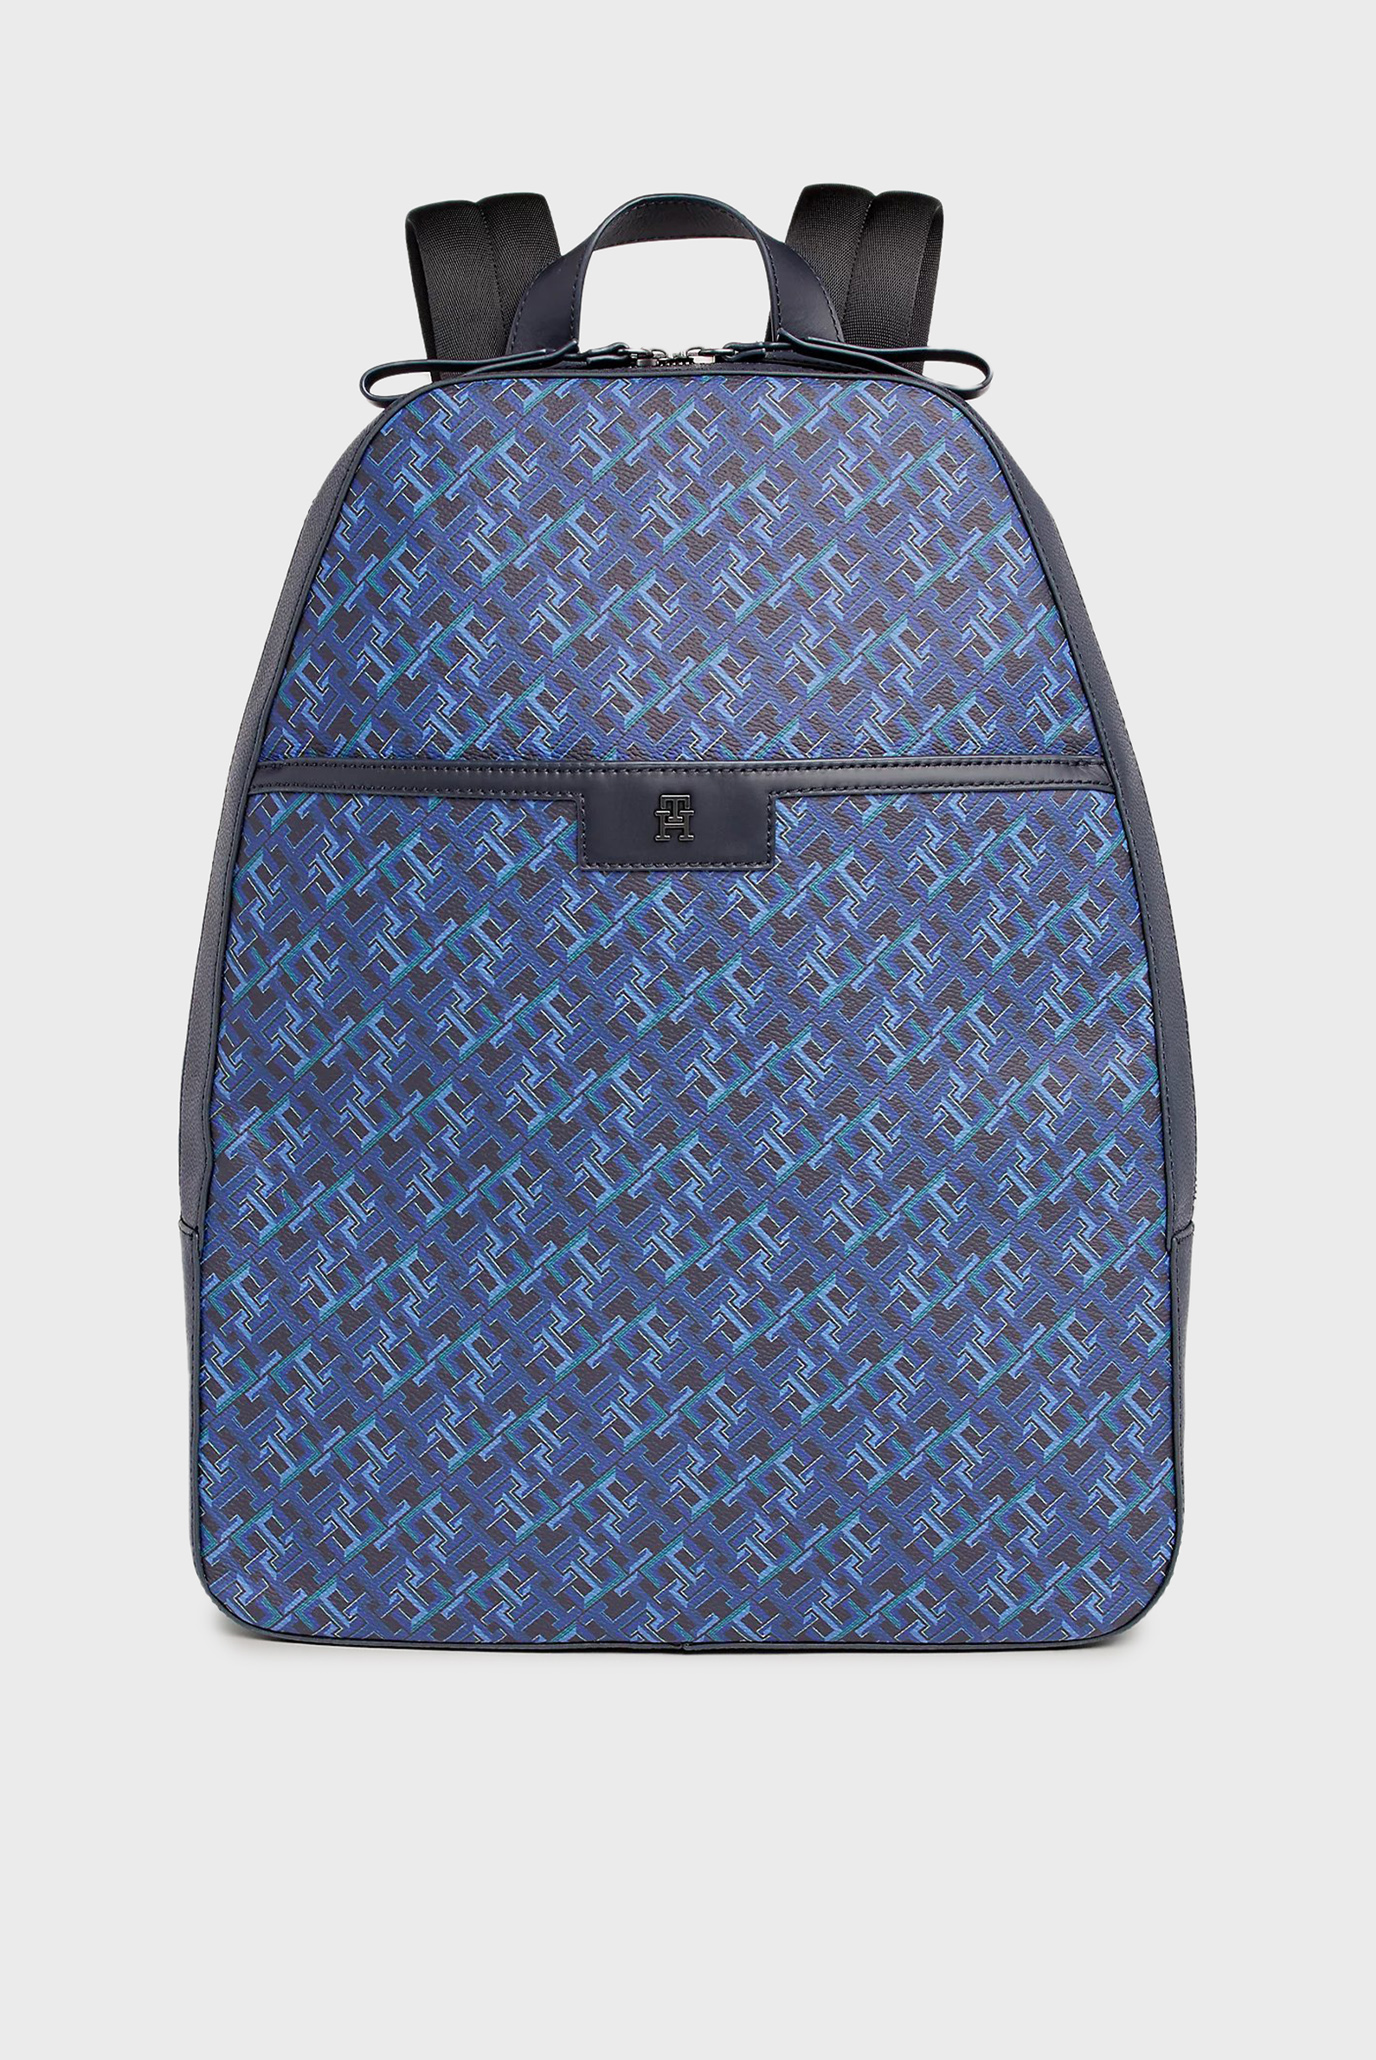 Мужской синий рюкзак с узором TH MONOGRAM DOME 1